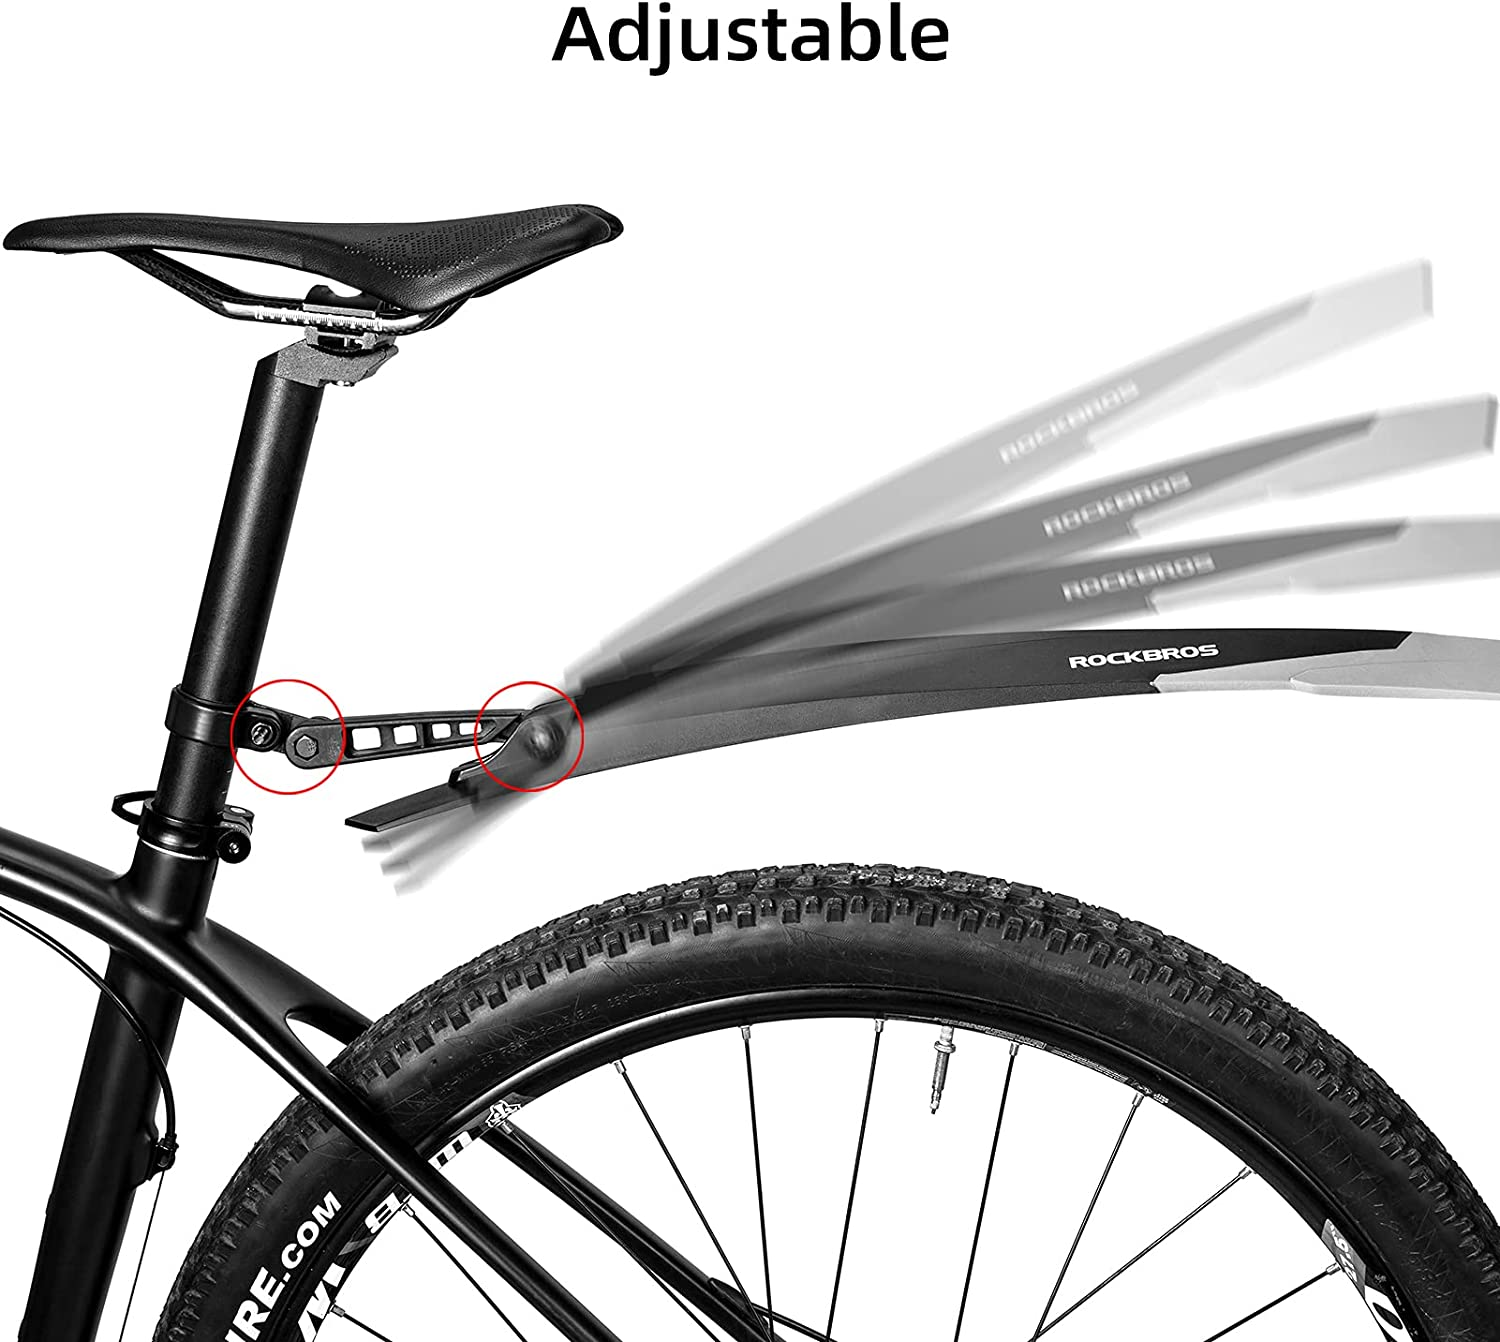 https://www.mountainbikenut.com/wp-content/uploads/2022/09/mountain-bike-mudguards-that-wiggle.png